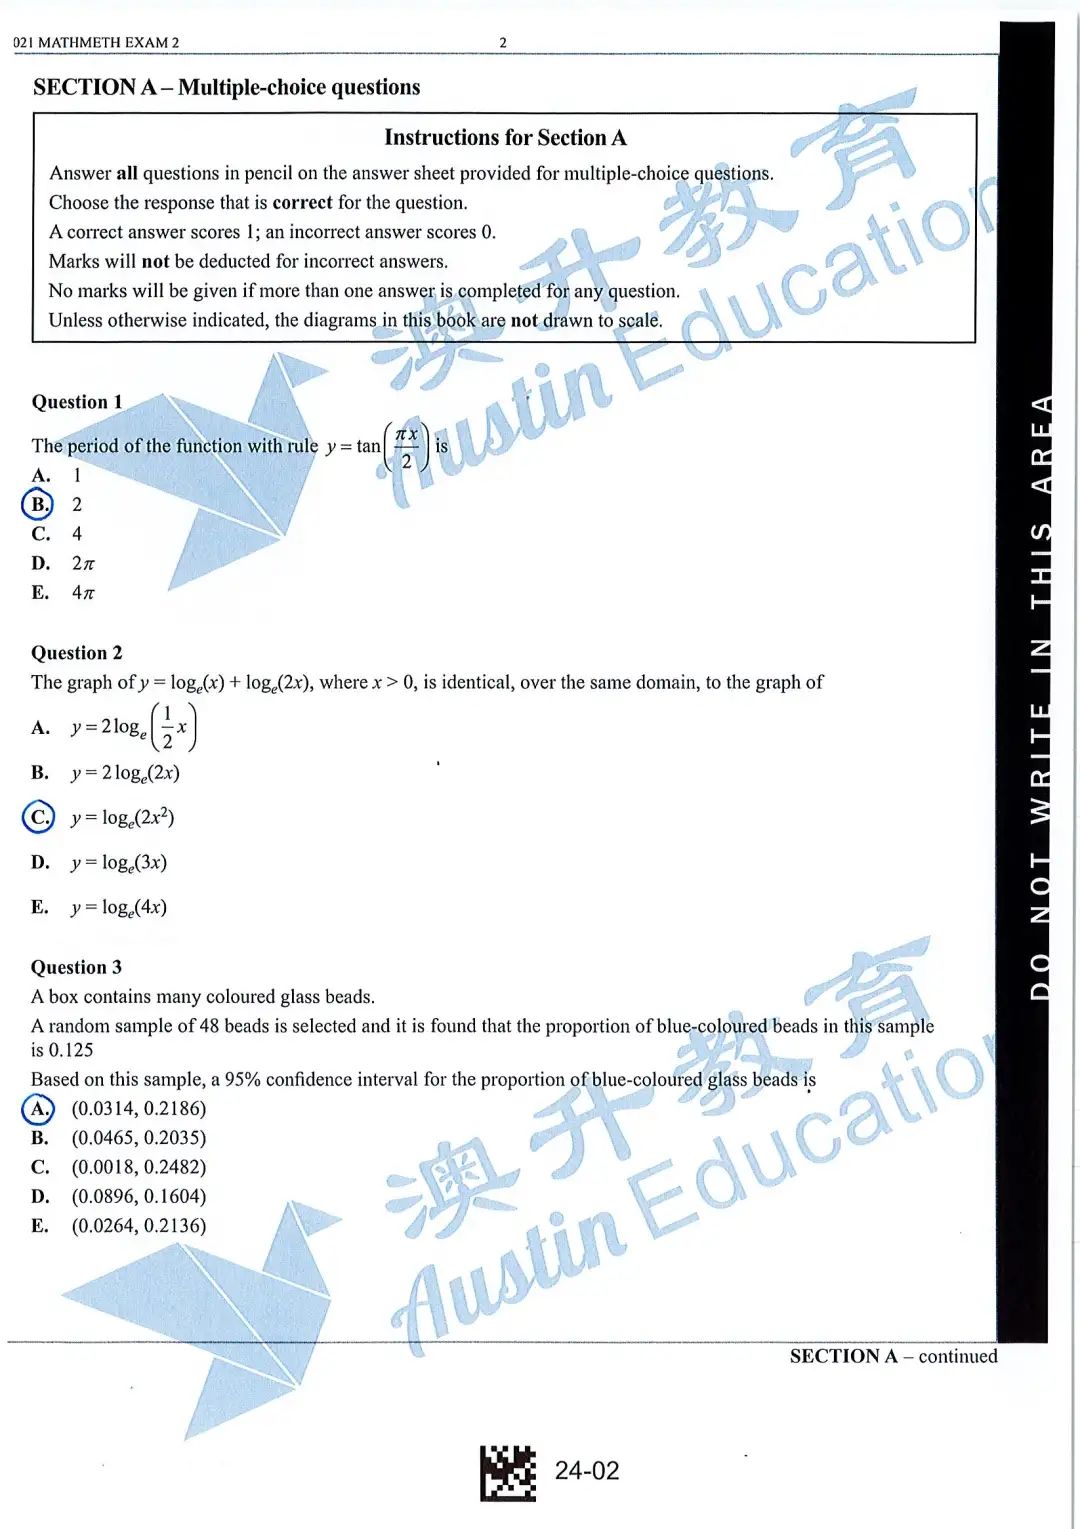 vce exam timetable 2021 - Austin Education 01